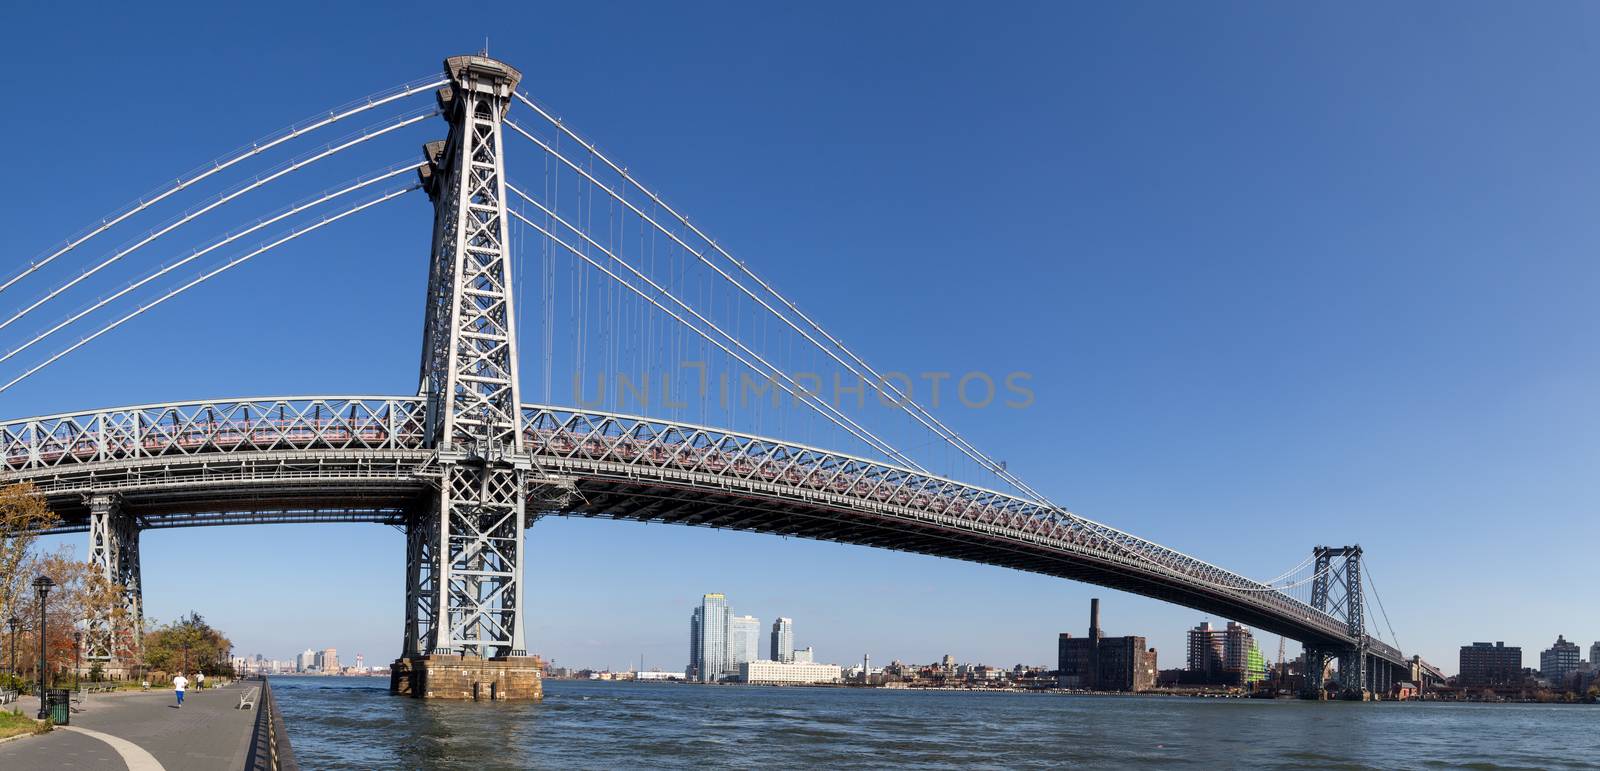 New York, United States of America - November 17, 2016: PAnoramic view of Williamsburg Bridge connecting Manhattan and Brooklyn